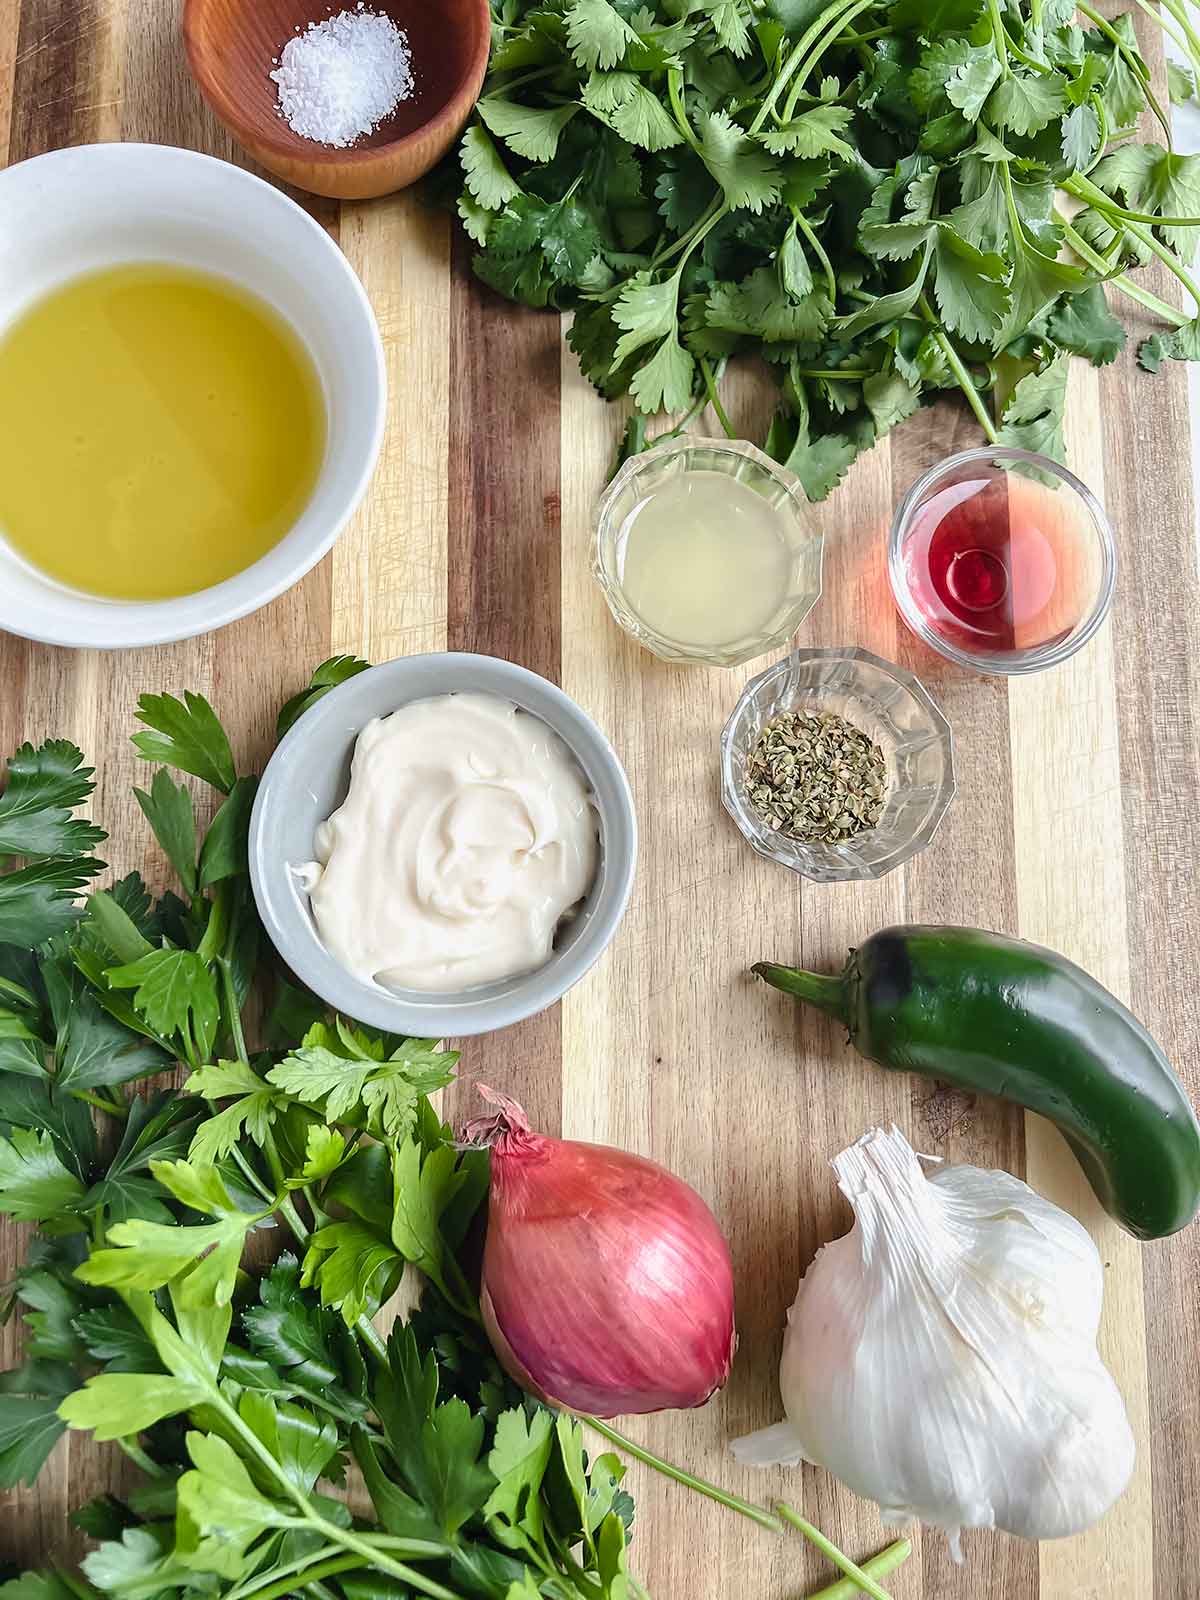 chimichurri aioli ingredients including garlic, parsley, cilantro, olive oil, kosher salt on wood cutting board